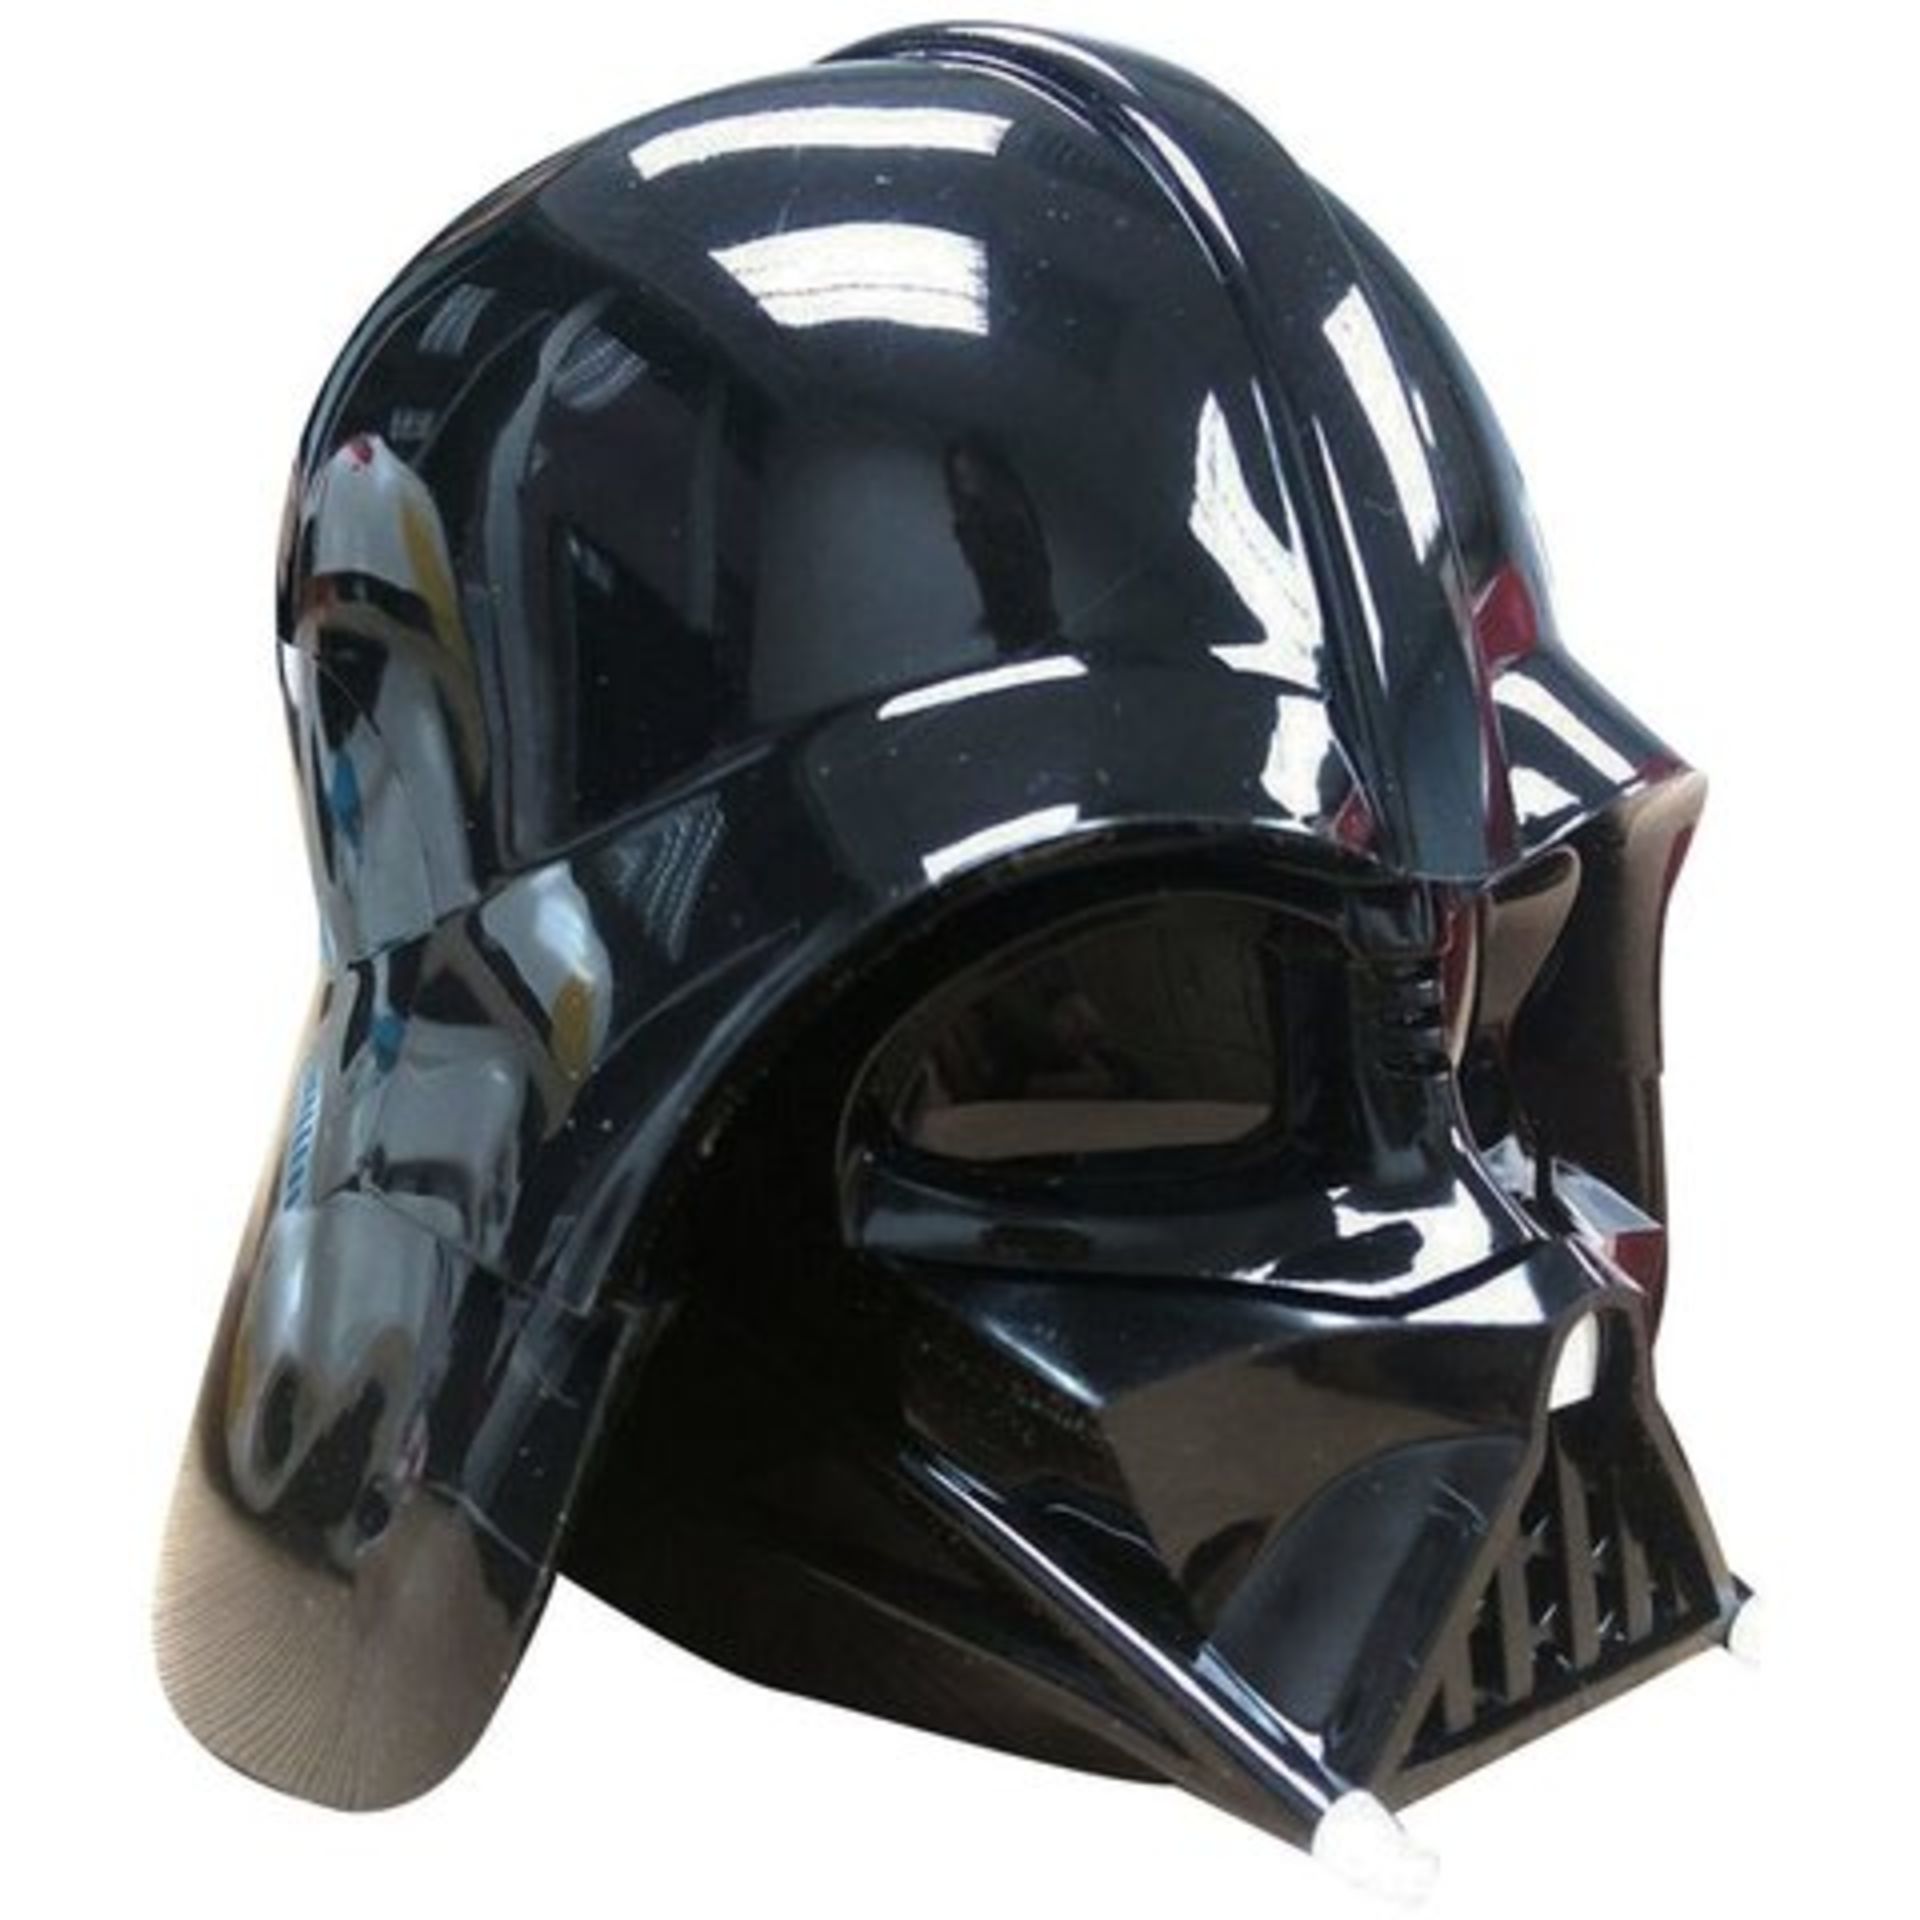 V Brand New Star Wars Darth Vader Watch In 3D Case eBay Price £42.63 - Image 2 of 2